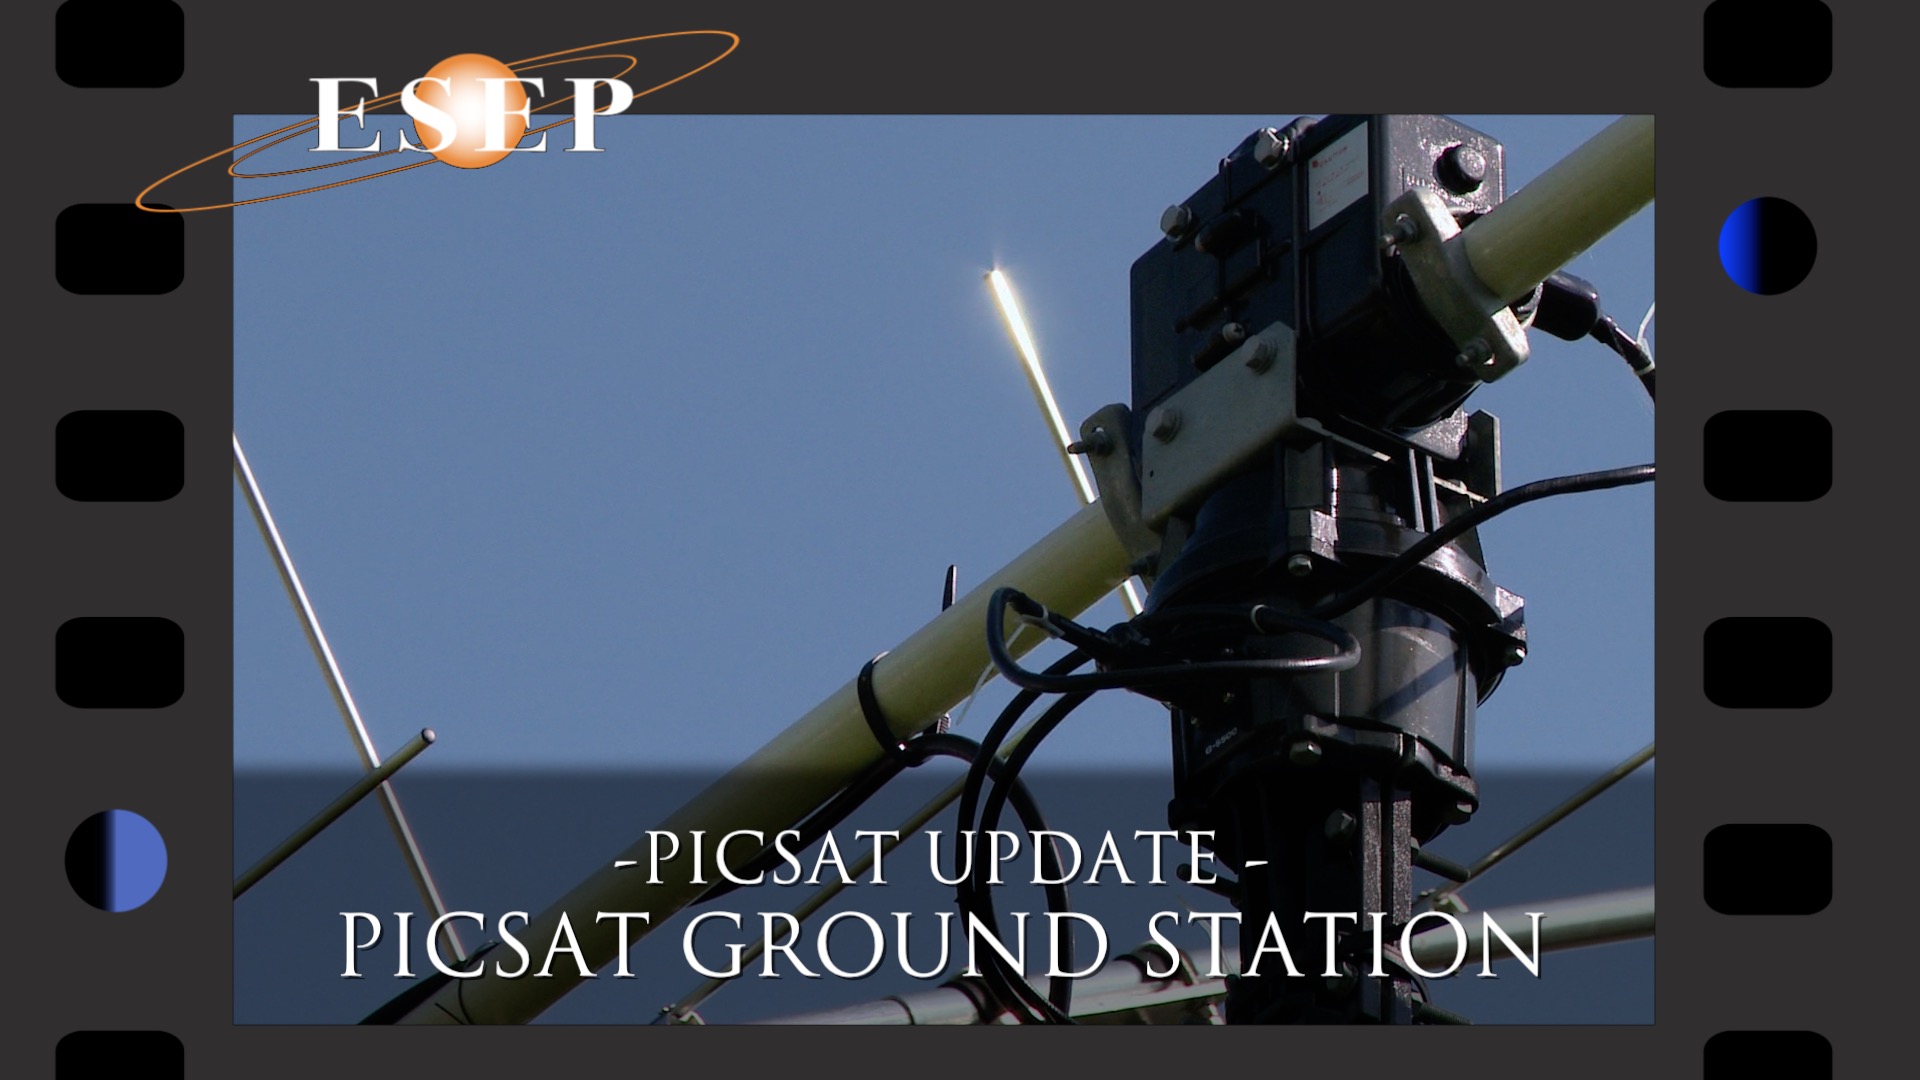 PICSAT update - 26 September 2017: PICSAT ground station